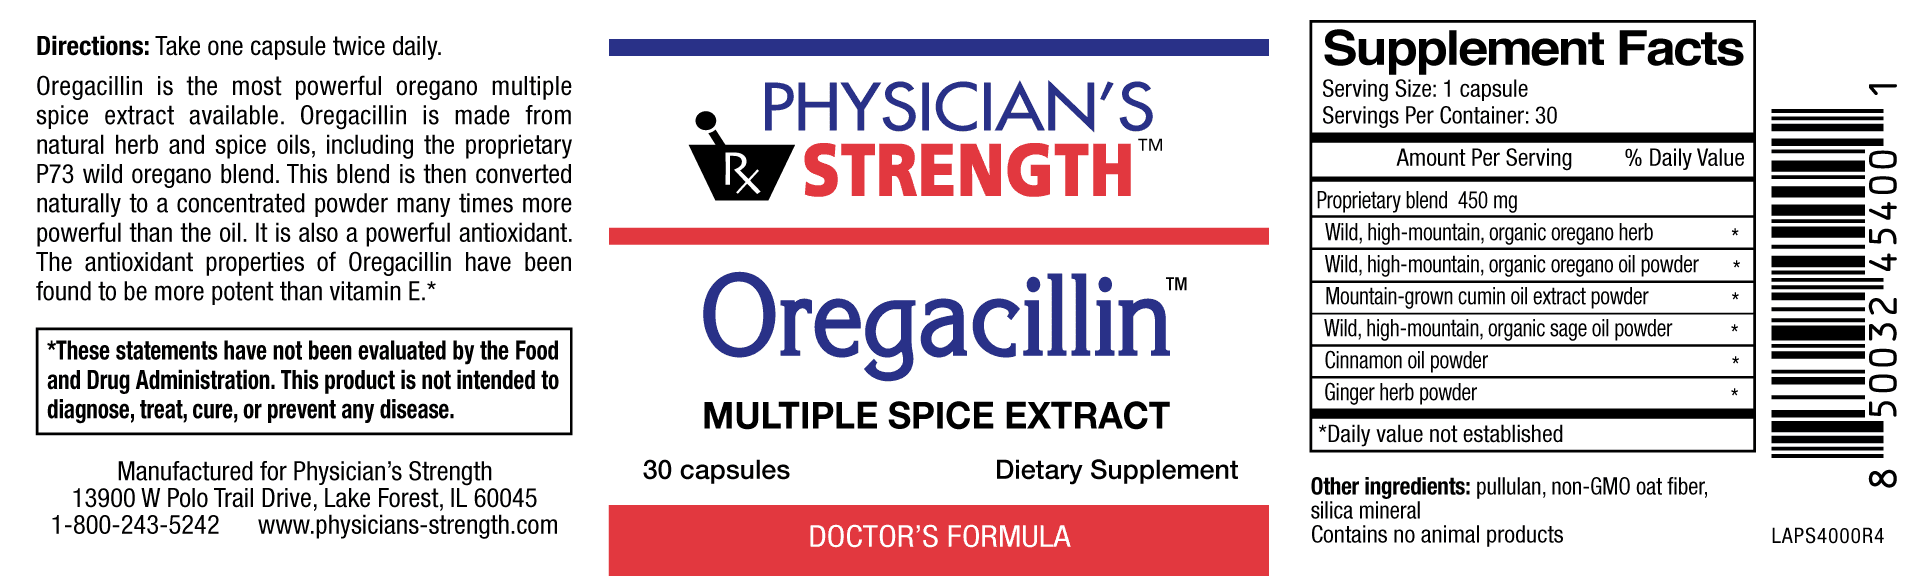 Oregacillin-Vitamins & Supplements-Physician's Strength-30 Capsules-Pine Street Clinic